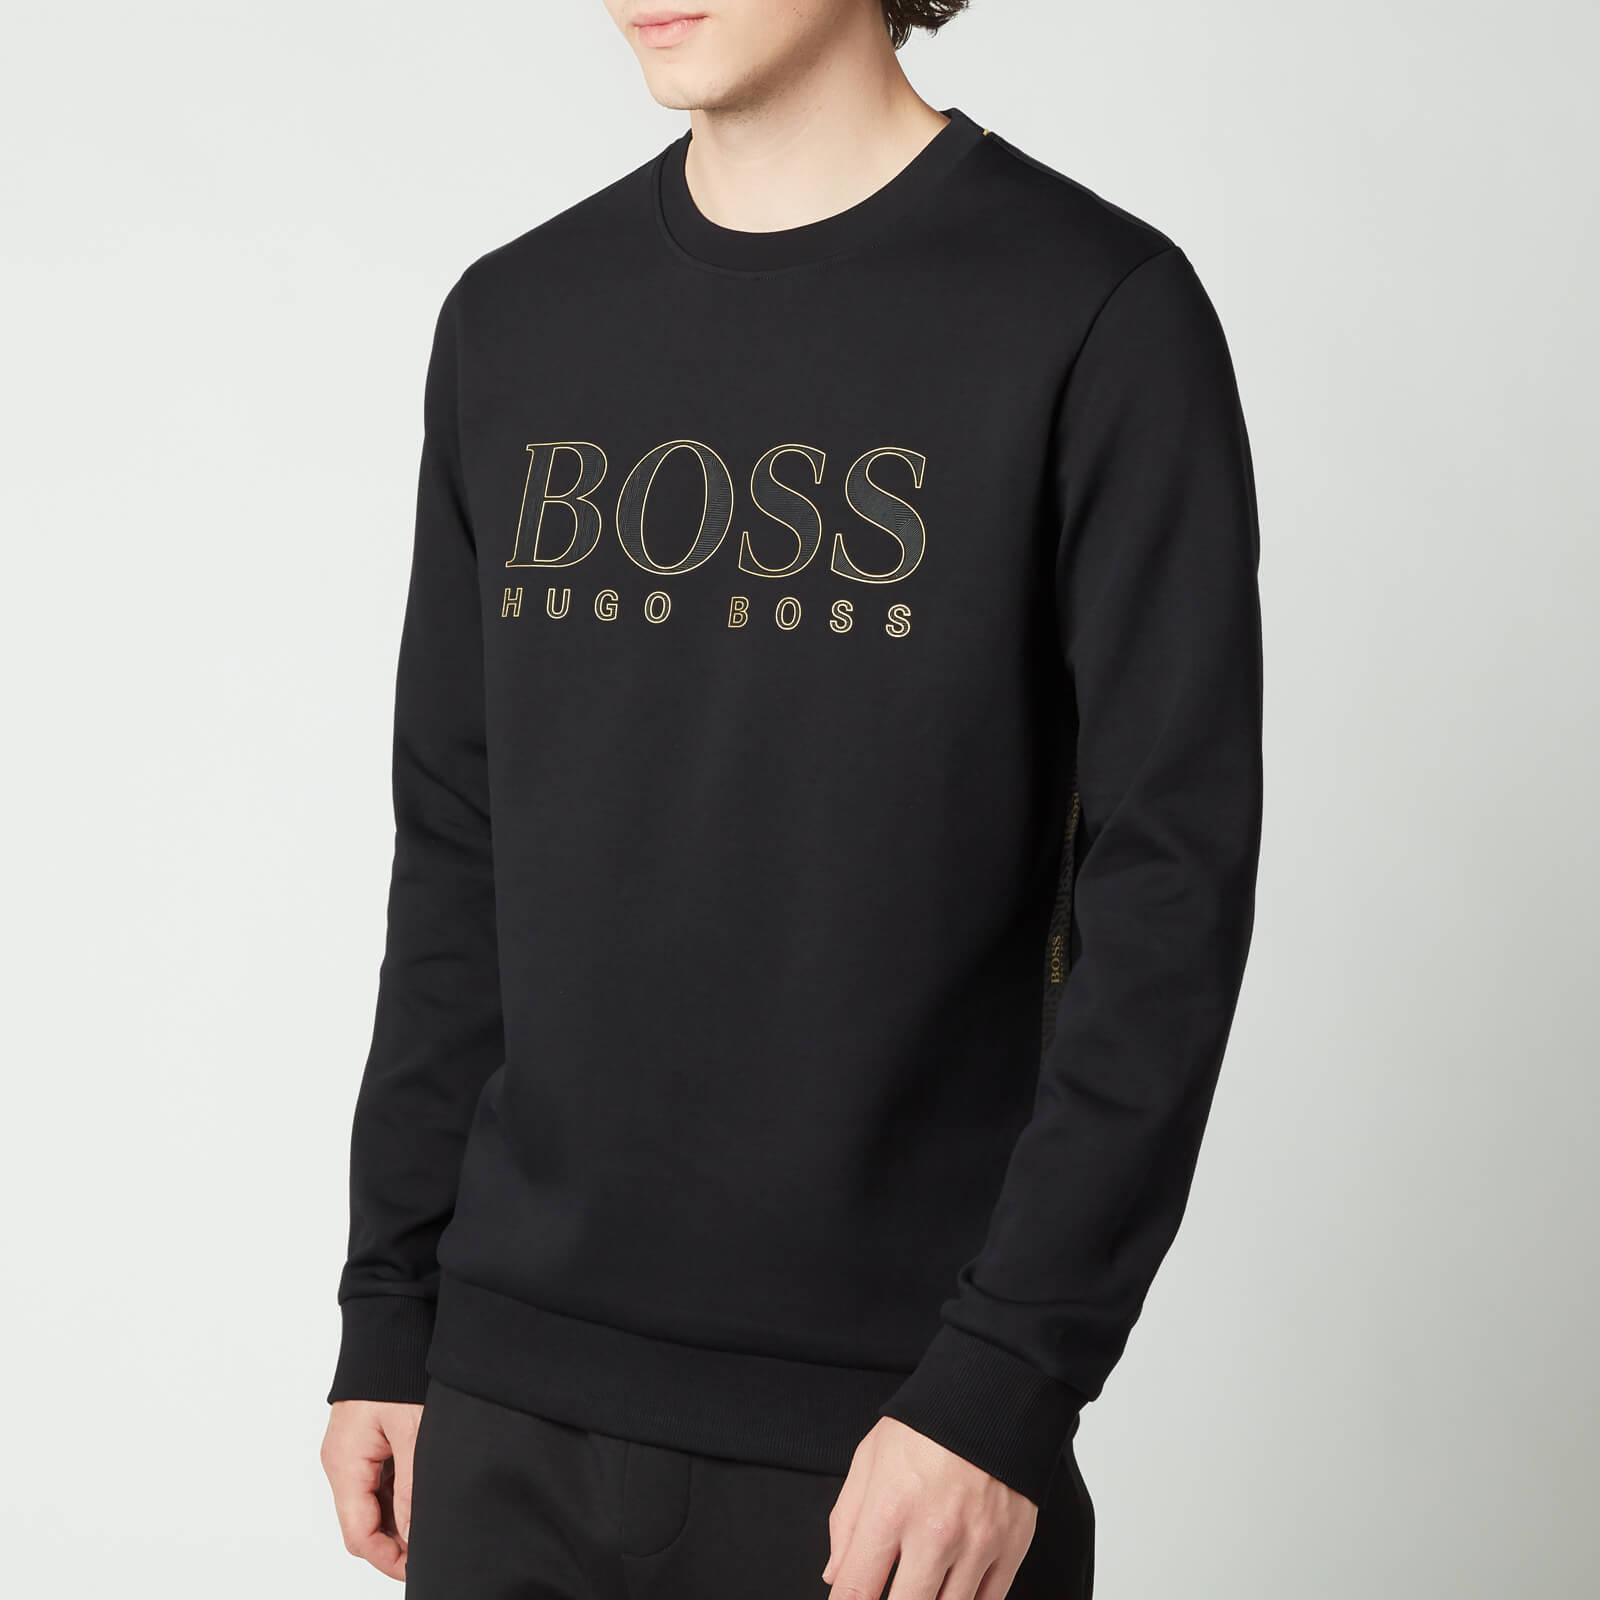 BOSS by HUGO BOSS Cotton Boss Athleisure Salbo Iconic Sweatshirt in Black  for Men - Lyst